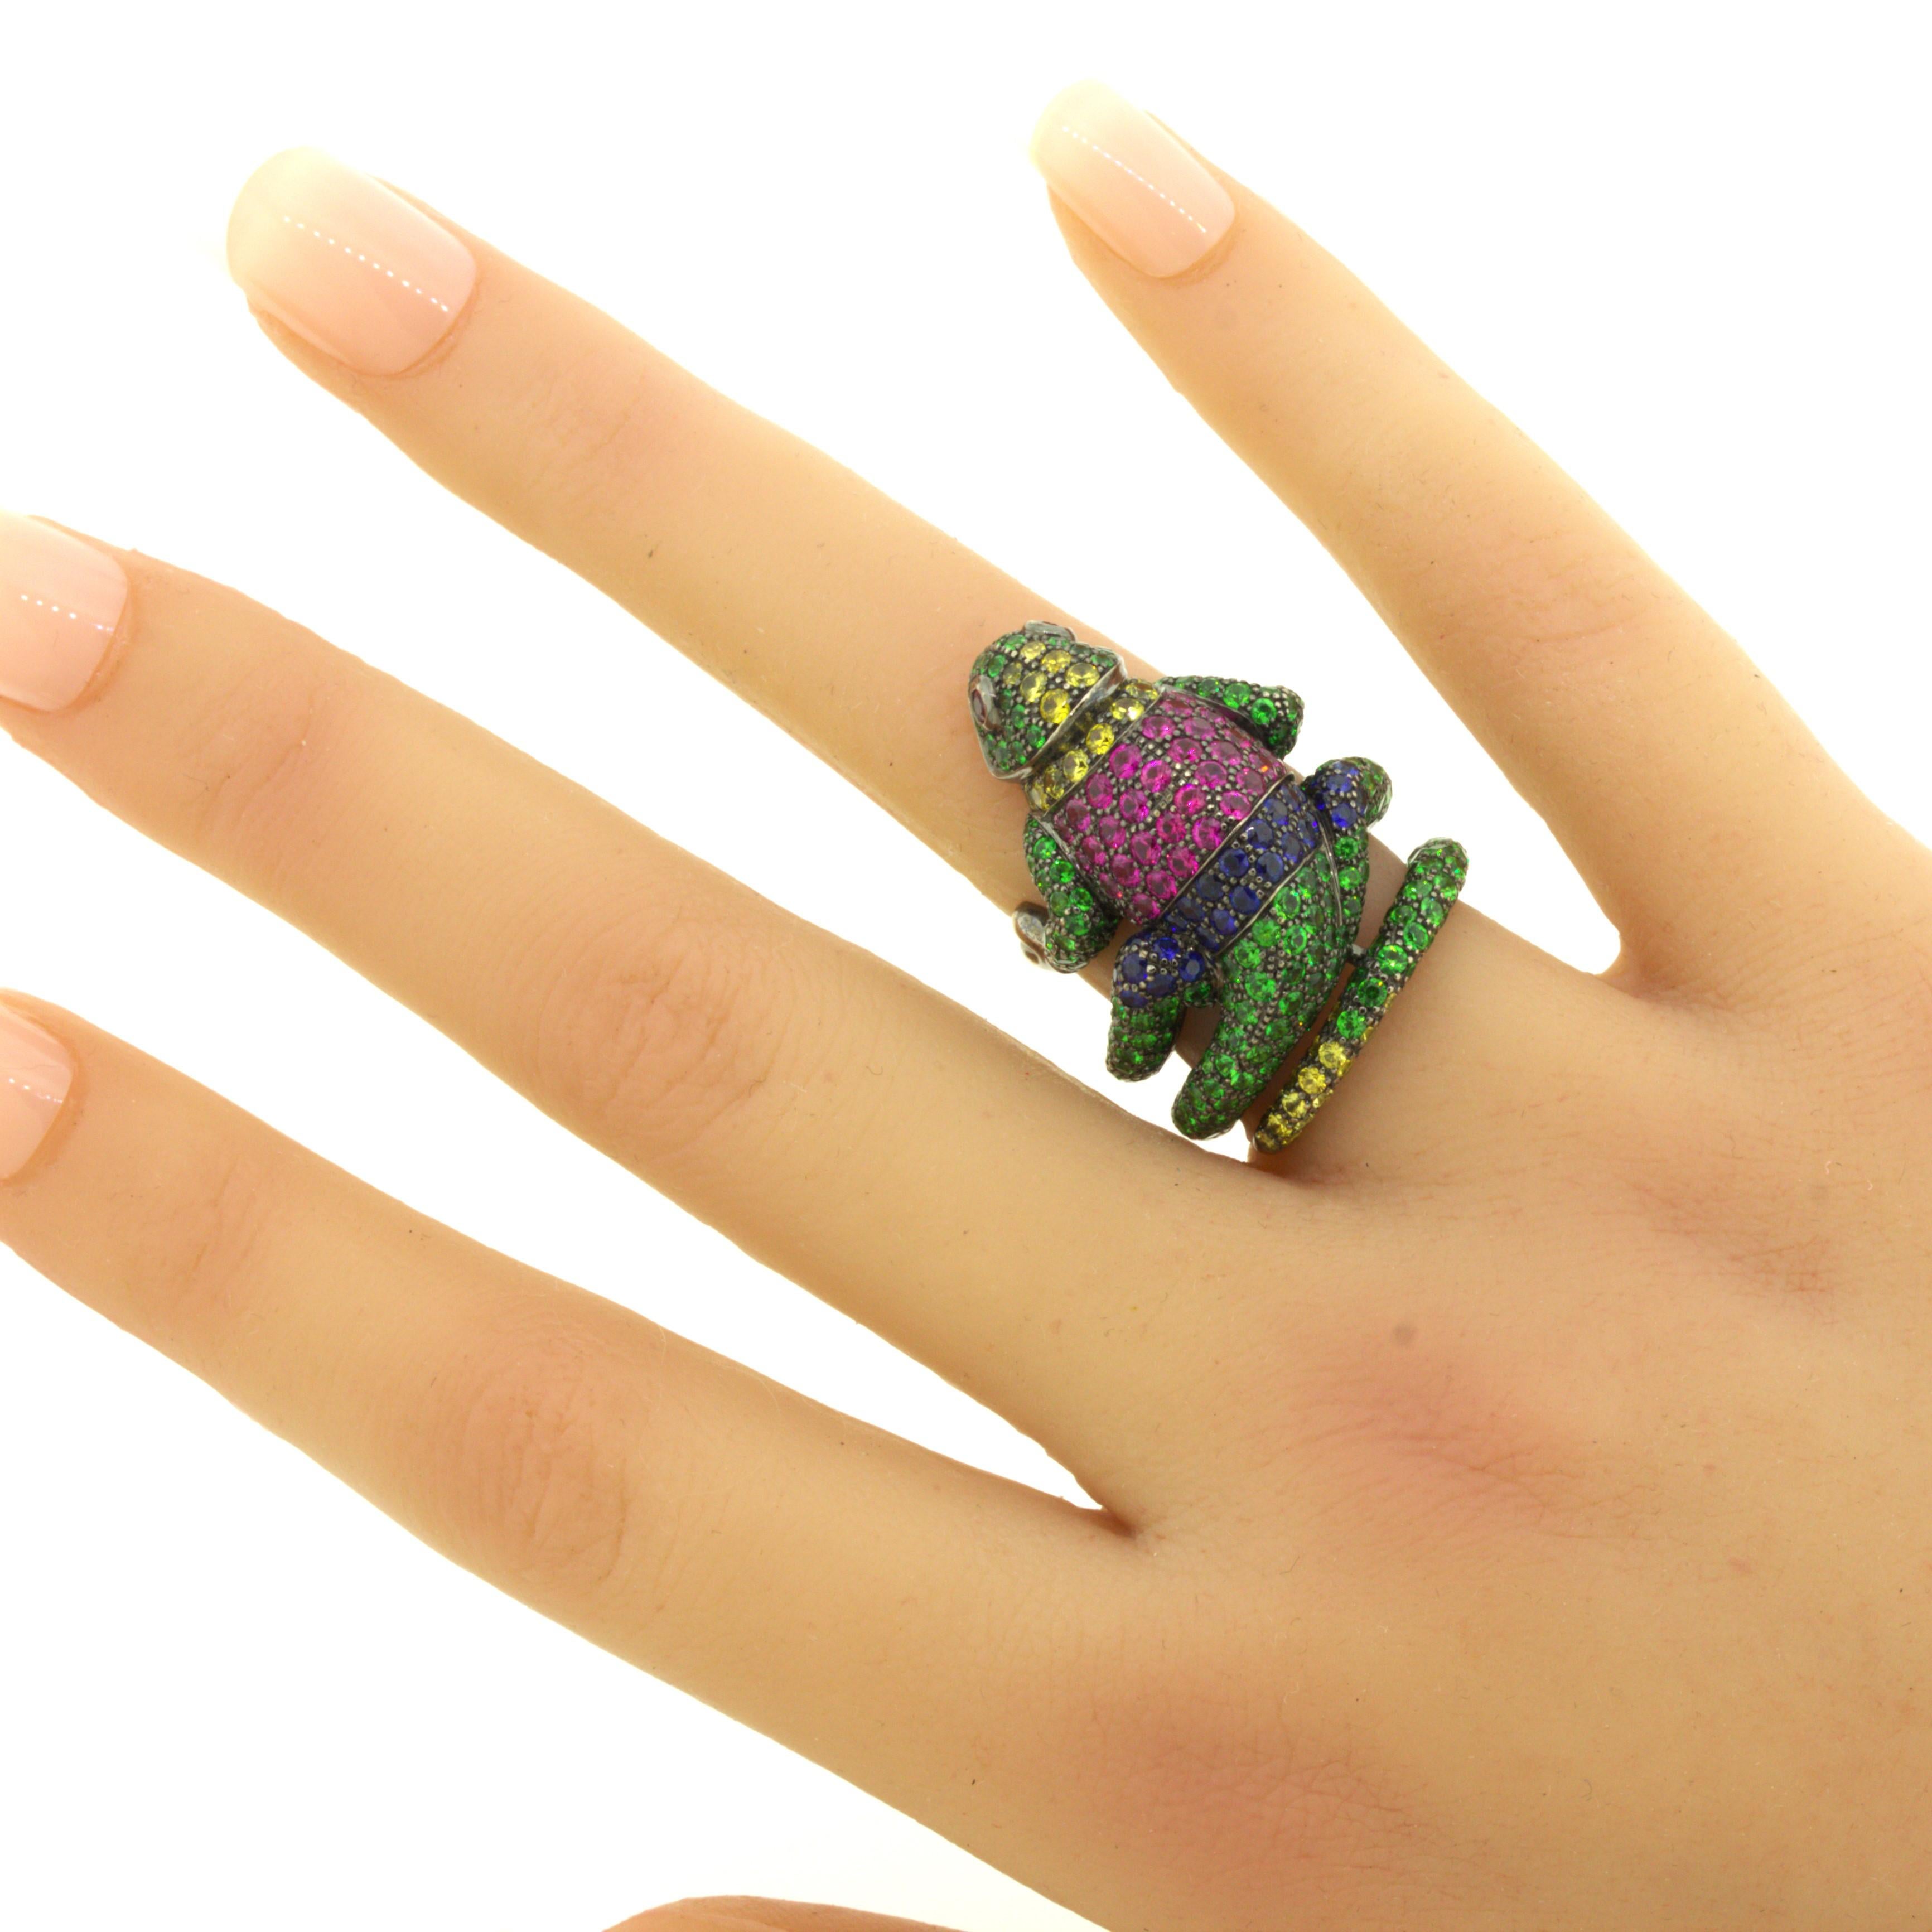 Boucheron “Masy the Chameleon” Tsavorite Sapphire Ruby Gold Animal Ring, French For Sale 5